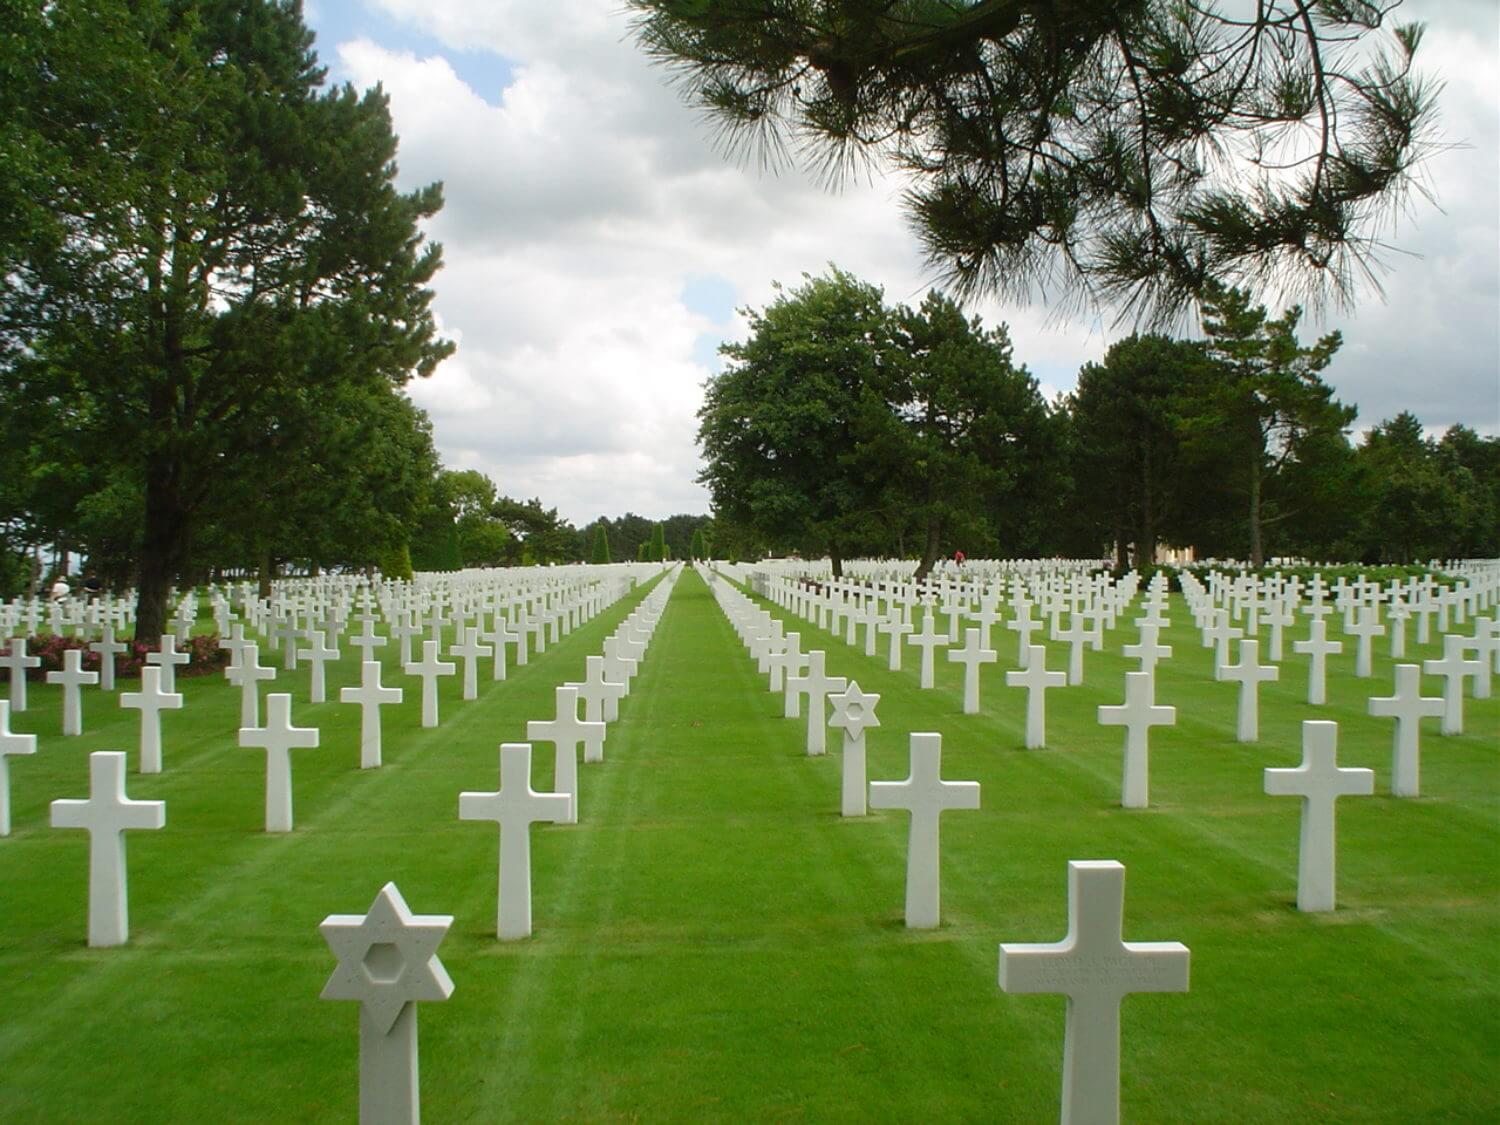 World War II film locations: Colleville-sur-Mer American Cemetery